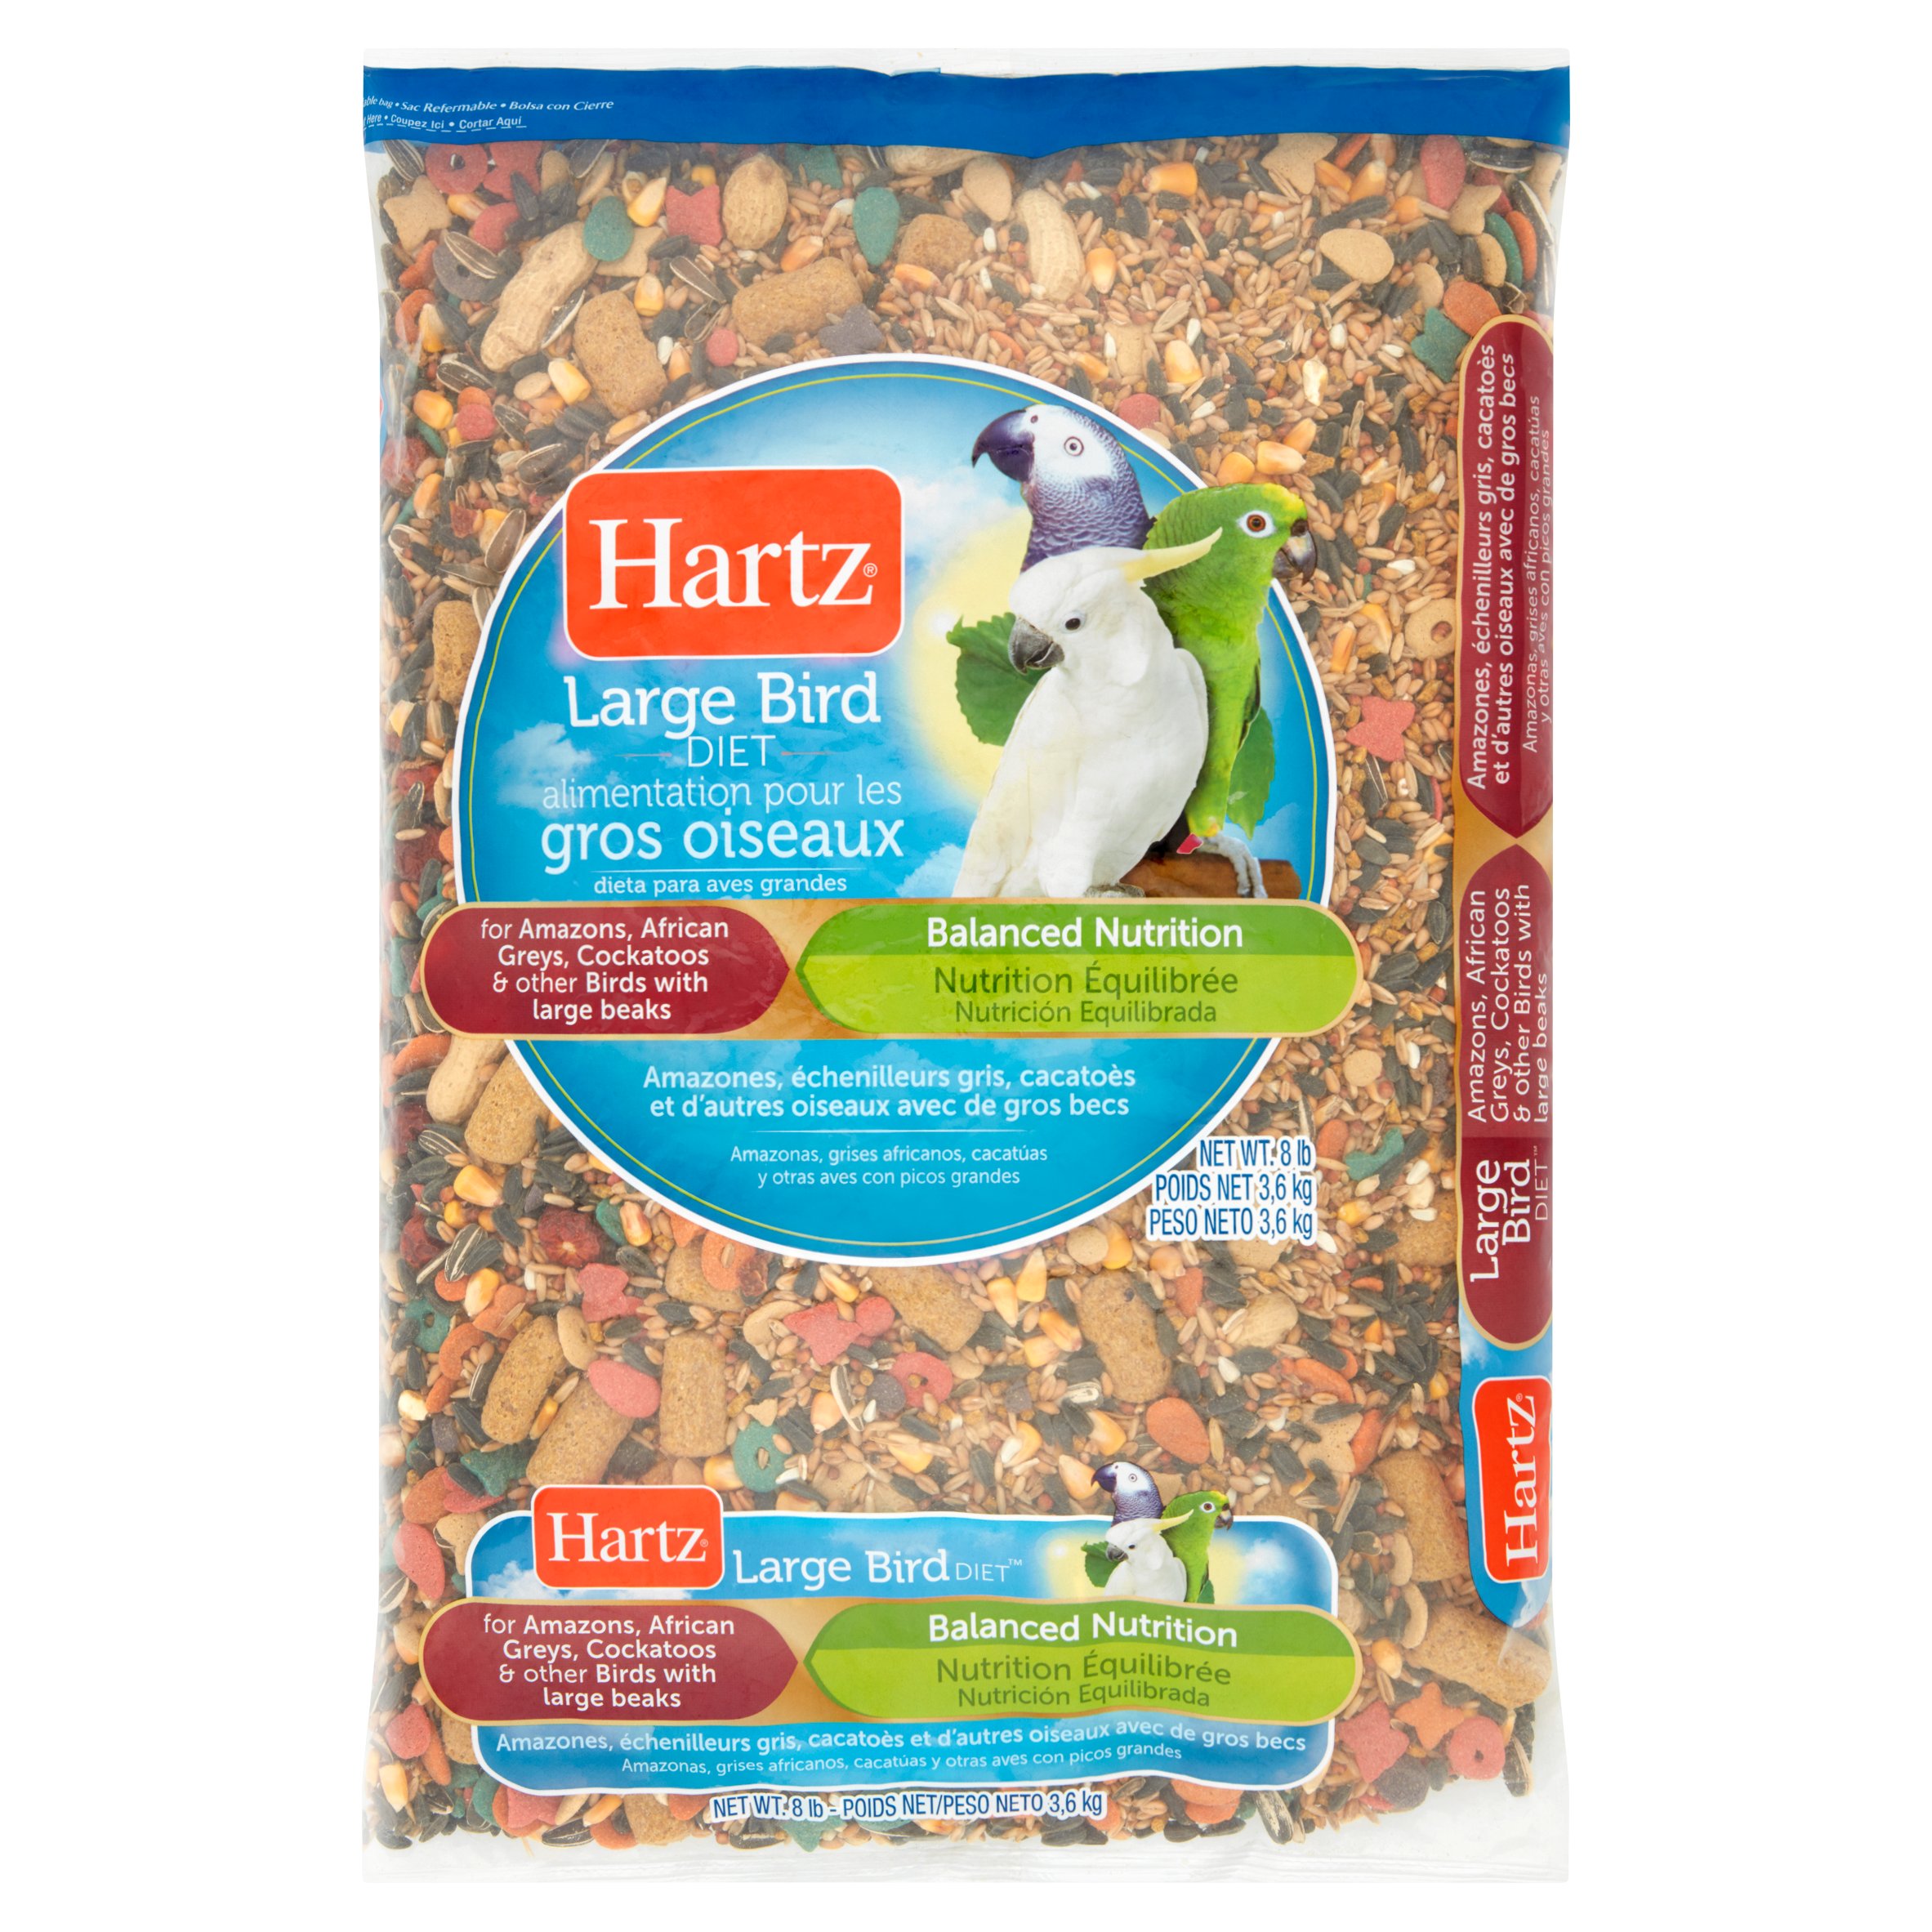 Hartz Large Bird Diet Balanced Nutrition, 8 lb - image 1 of 4